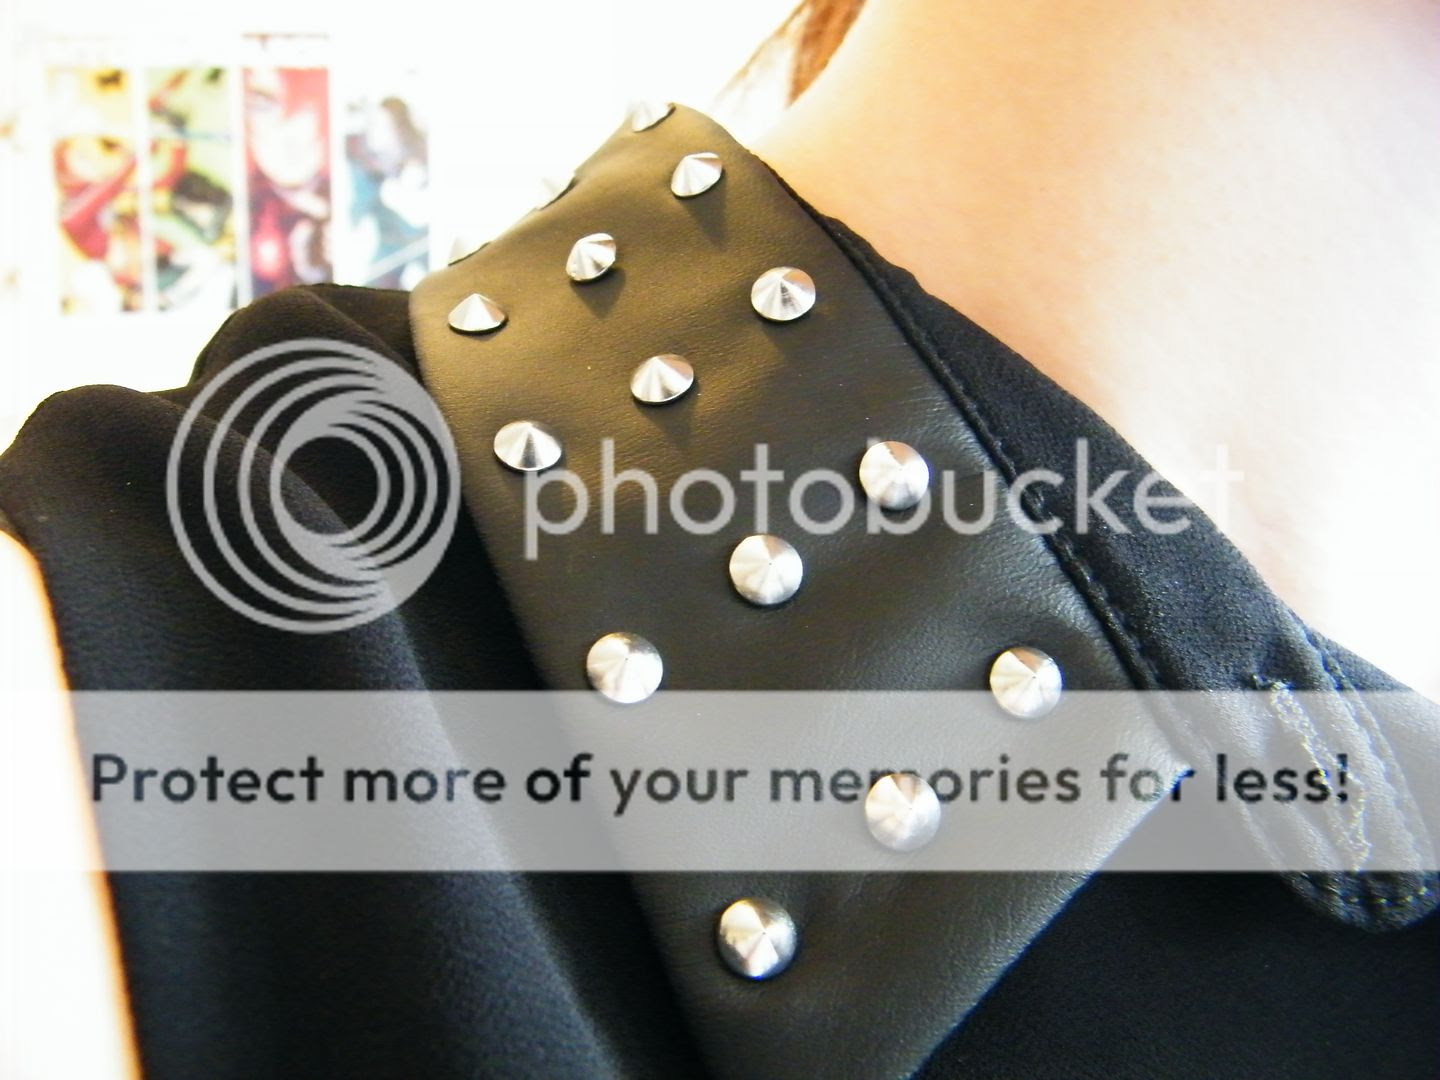 New Look Black Studded Collar Dress